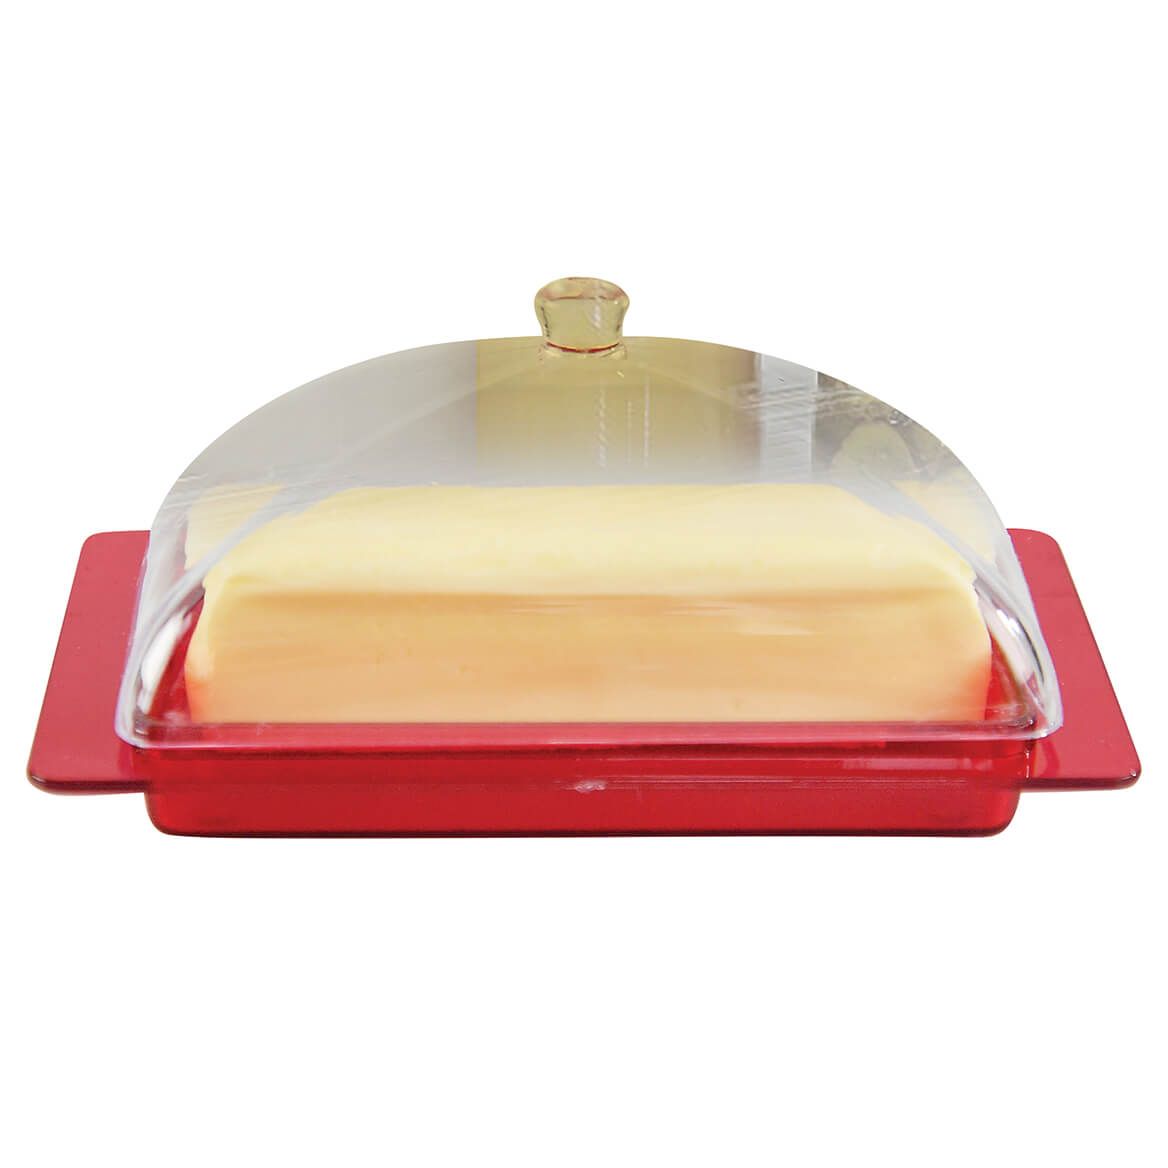 Red Fridge Organizer, Butter Dish + '-' + 375347